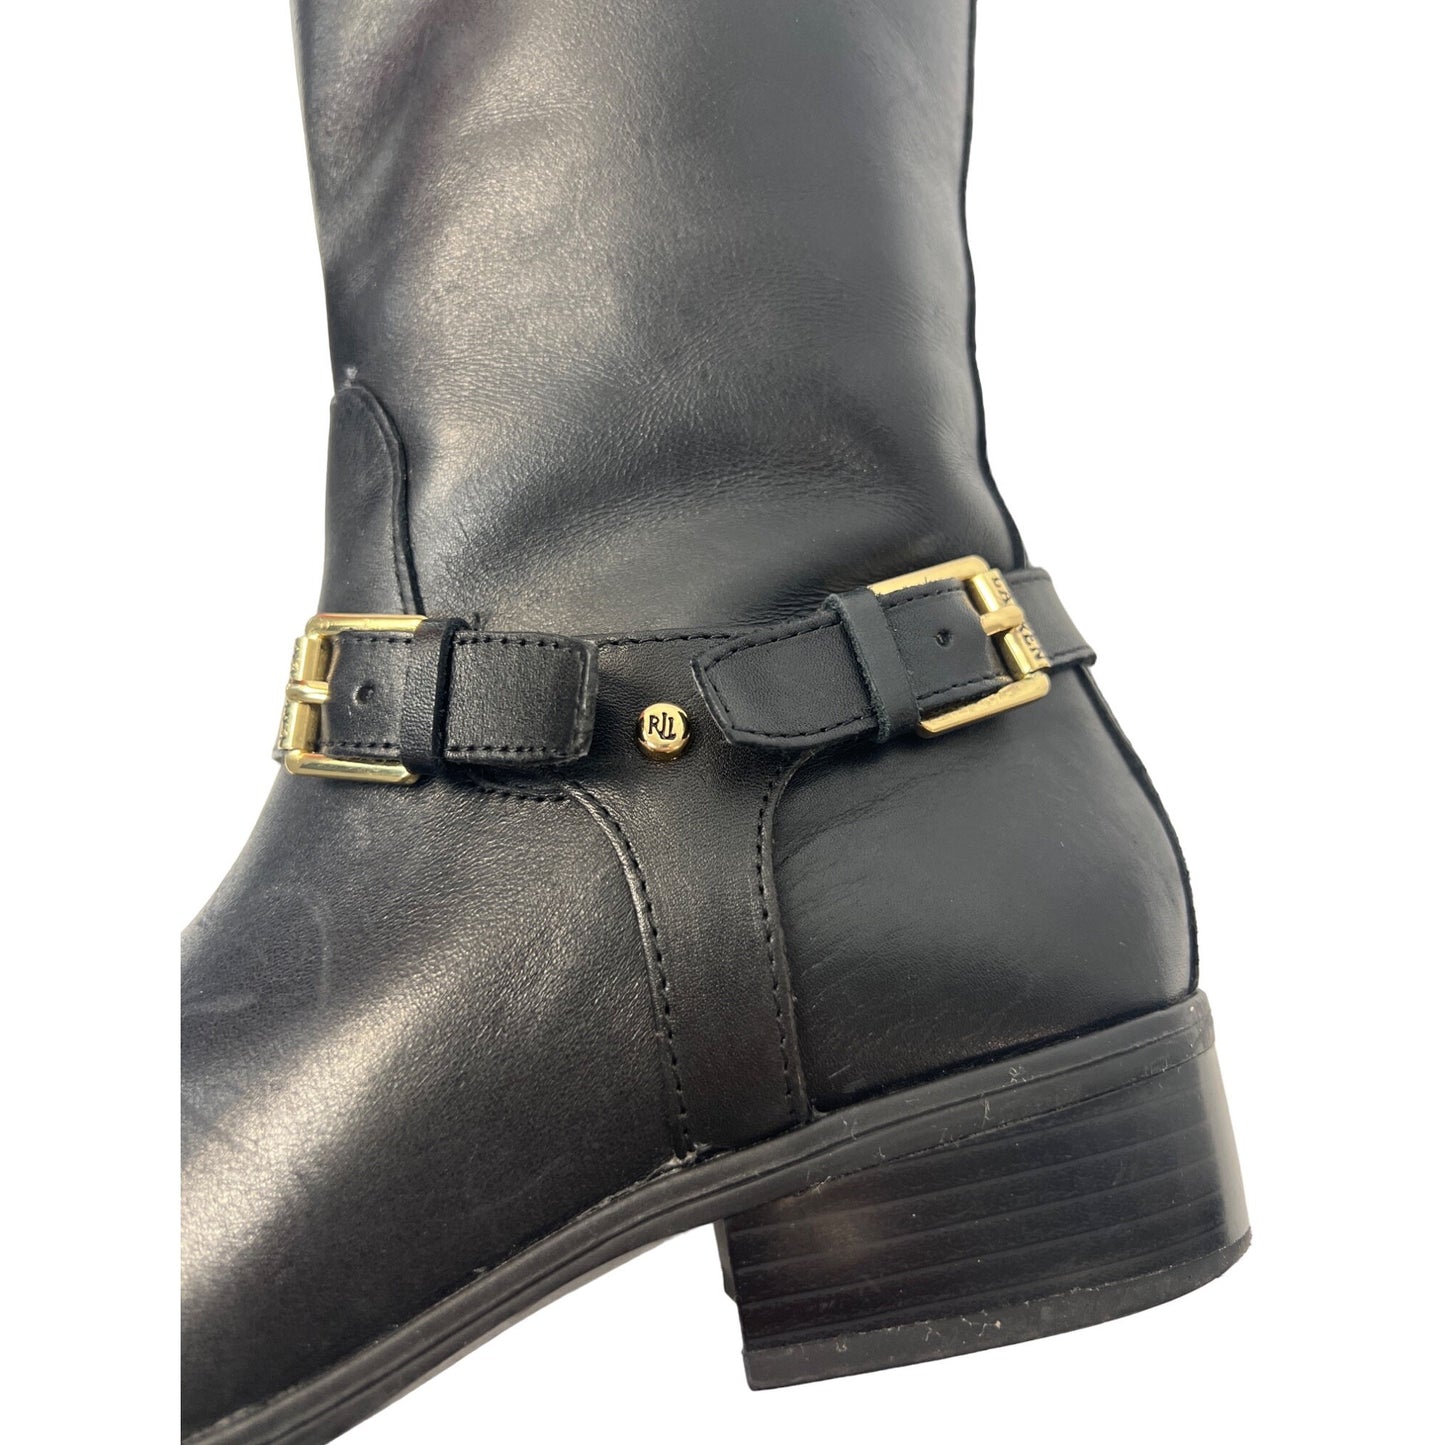 Lauren Ralph Lauren Marion Tall Black Leather Riding Boots